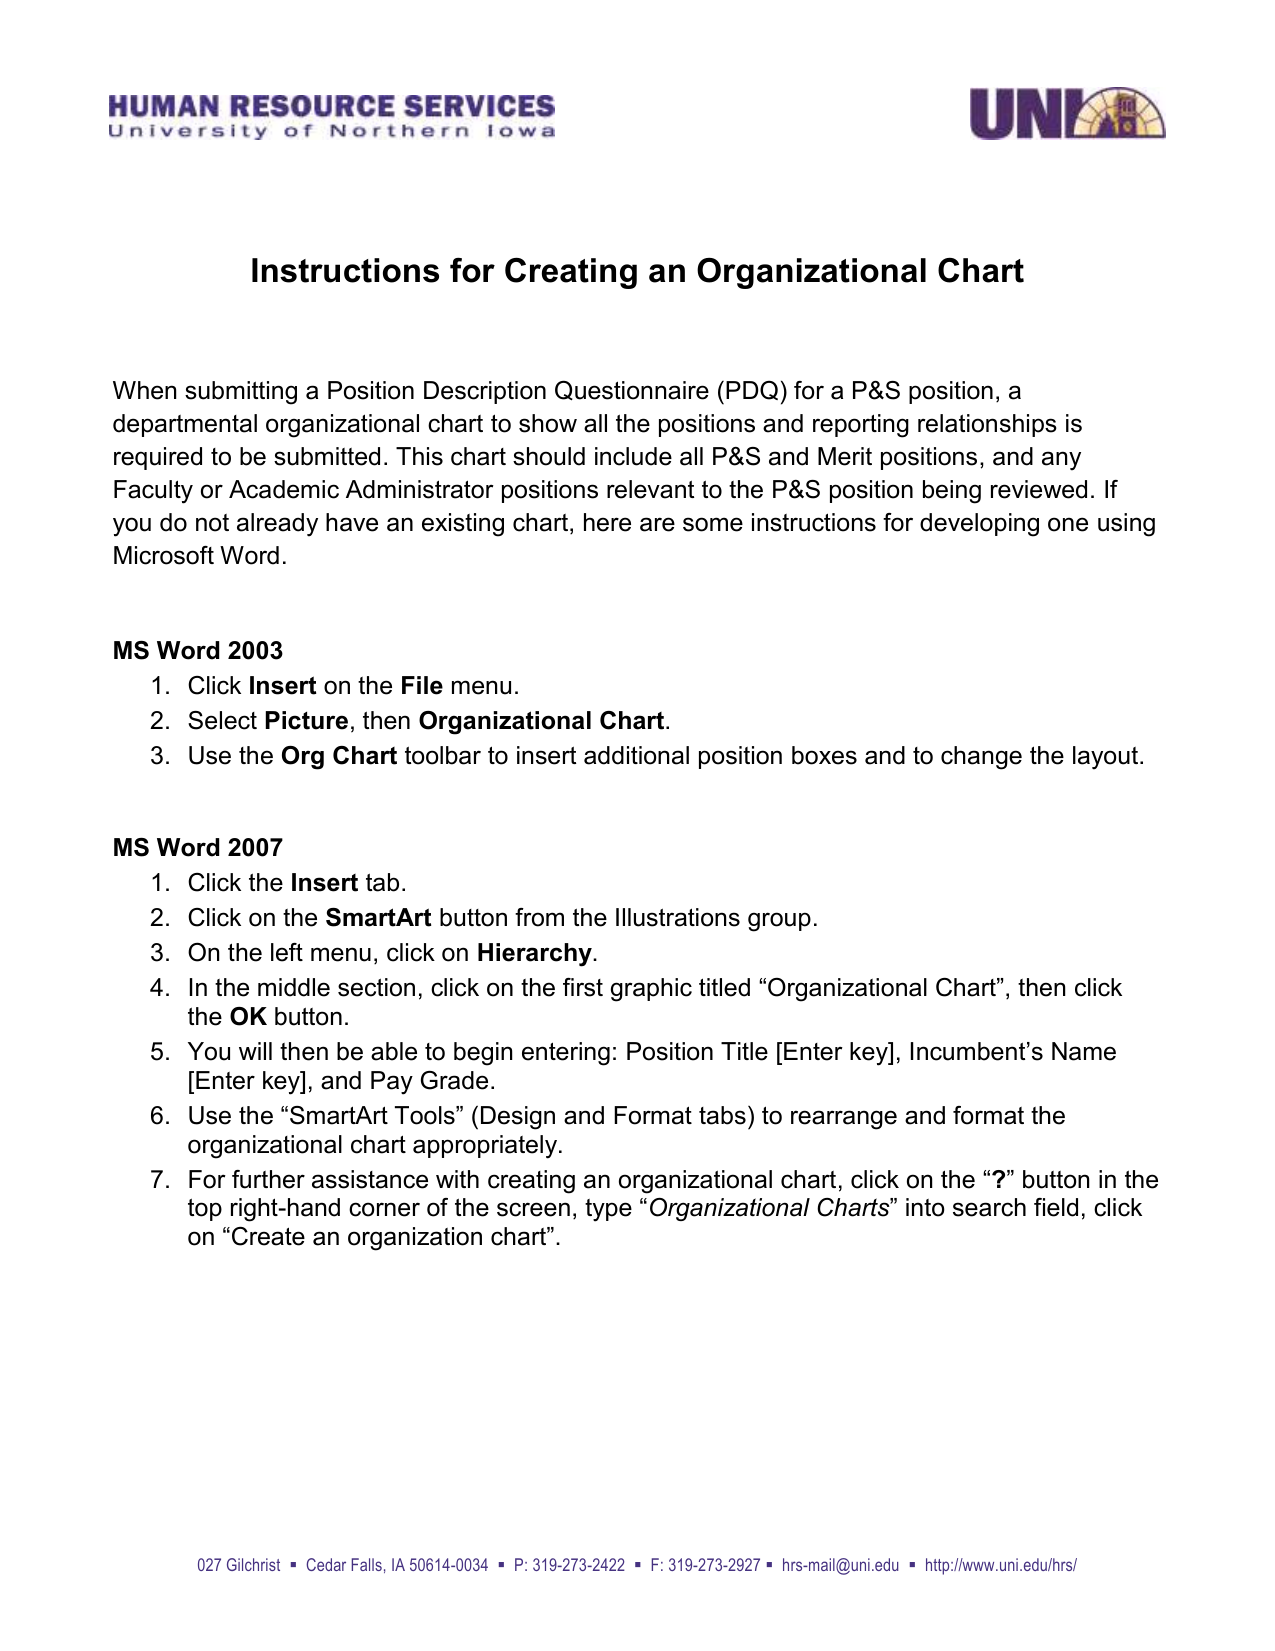 Creating Organizational Charts In Microsoft Office